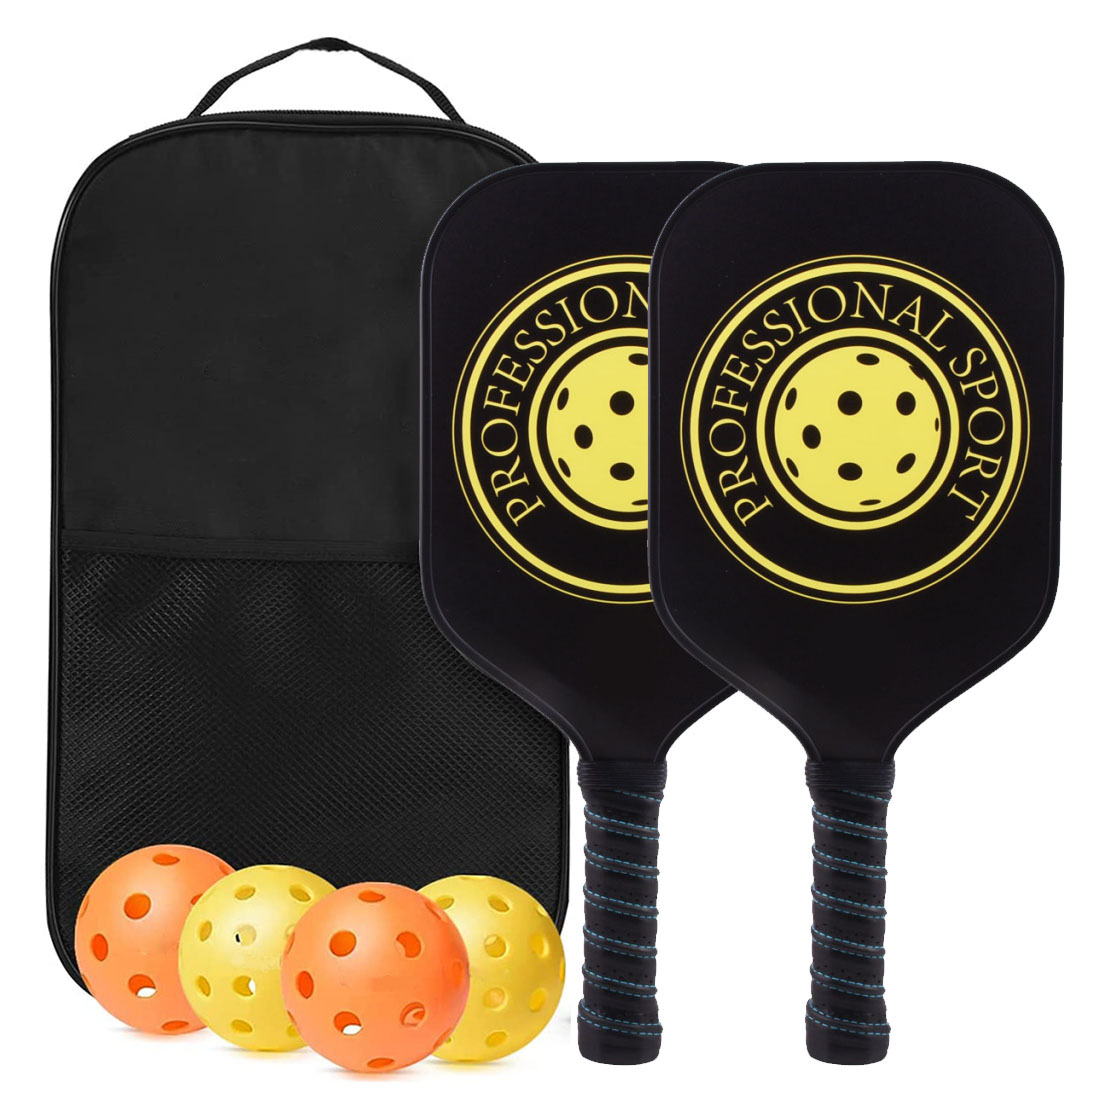 Carbon fiber aramid peak racket Pickleball Paddles PP honeycomb UV printed racket set